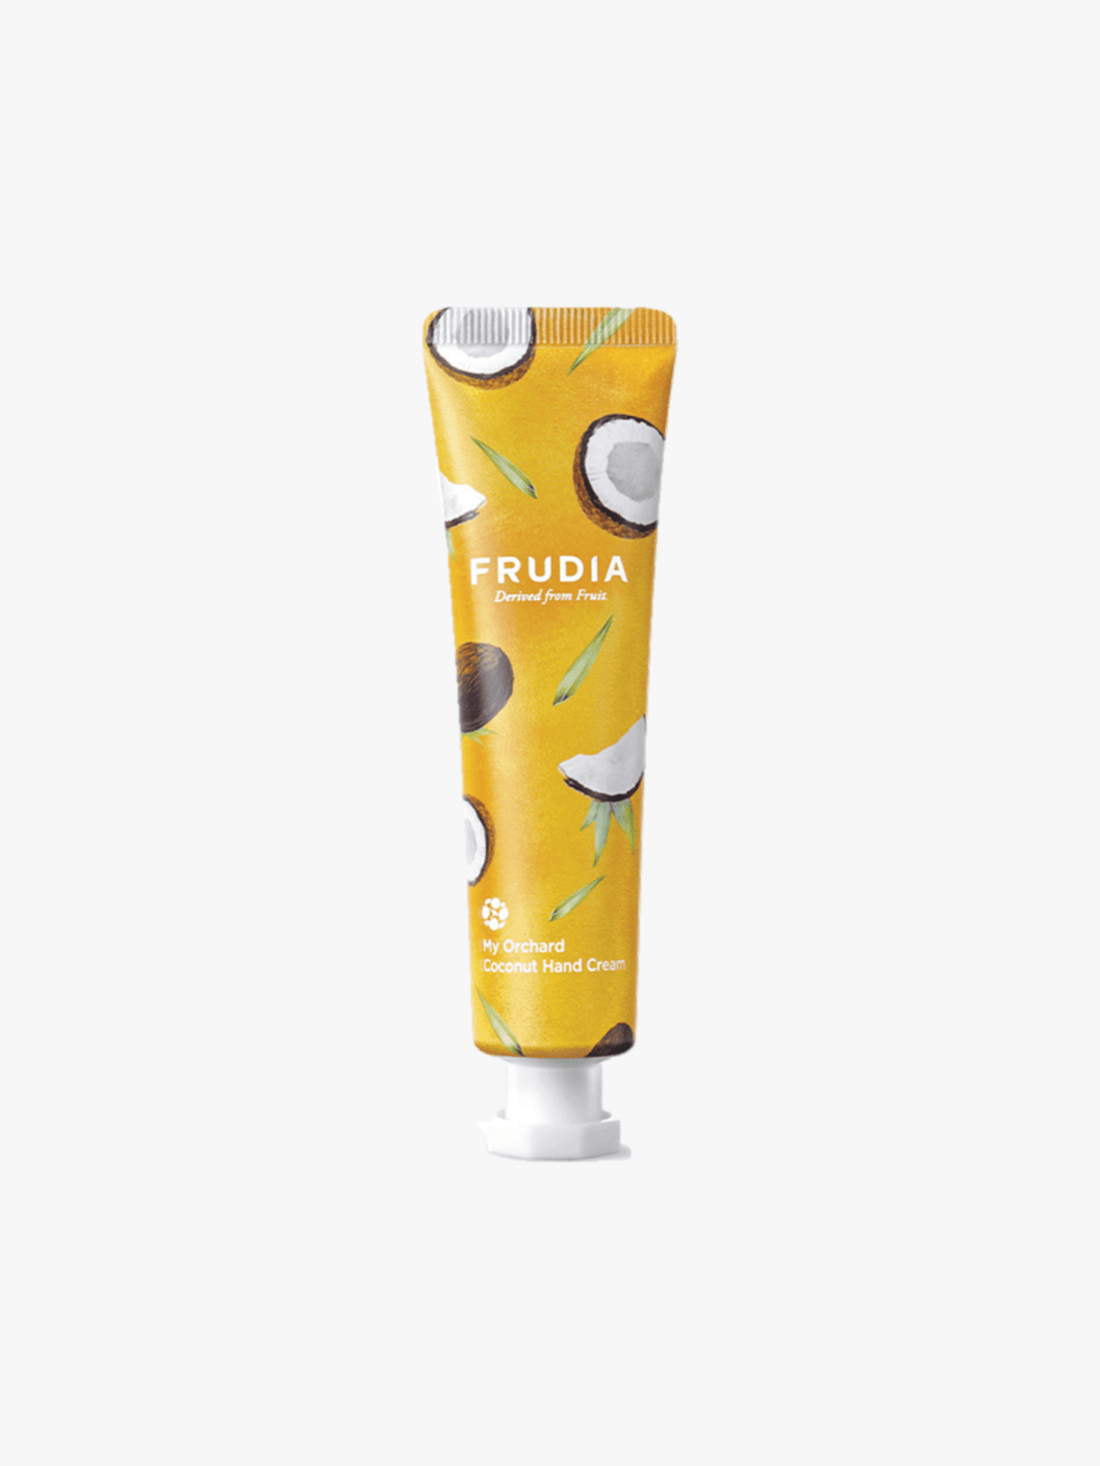 Frudia - Hand cream - My Orchard Hand Cream Coconut